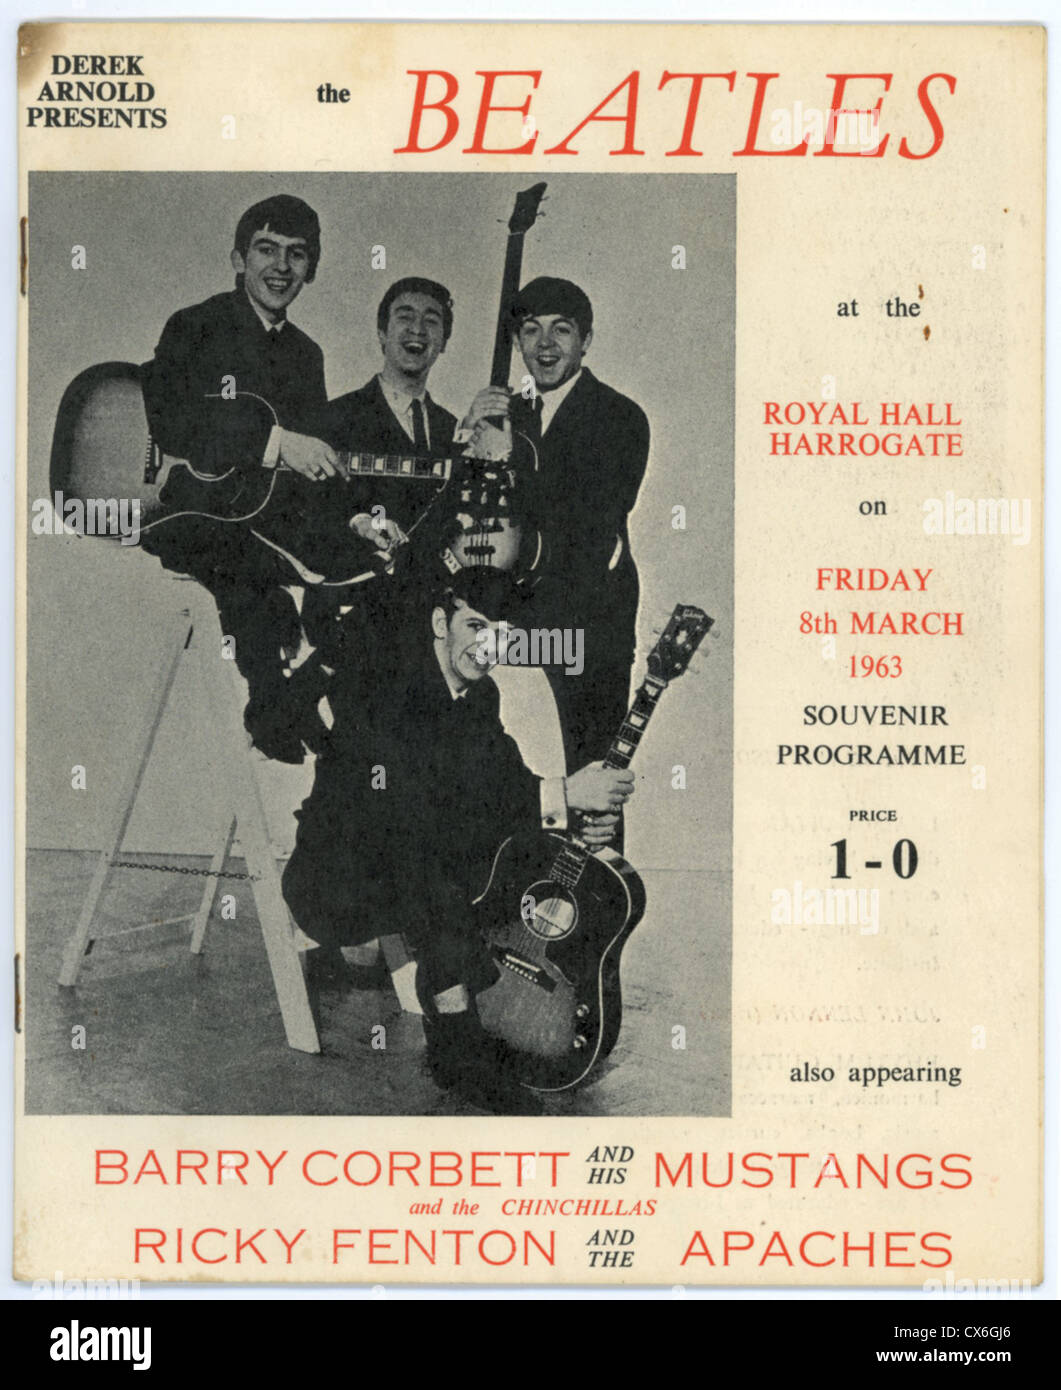 000011 - The Beatles Harrogate 1963 Concert Programme Stock Photo